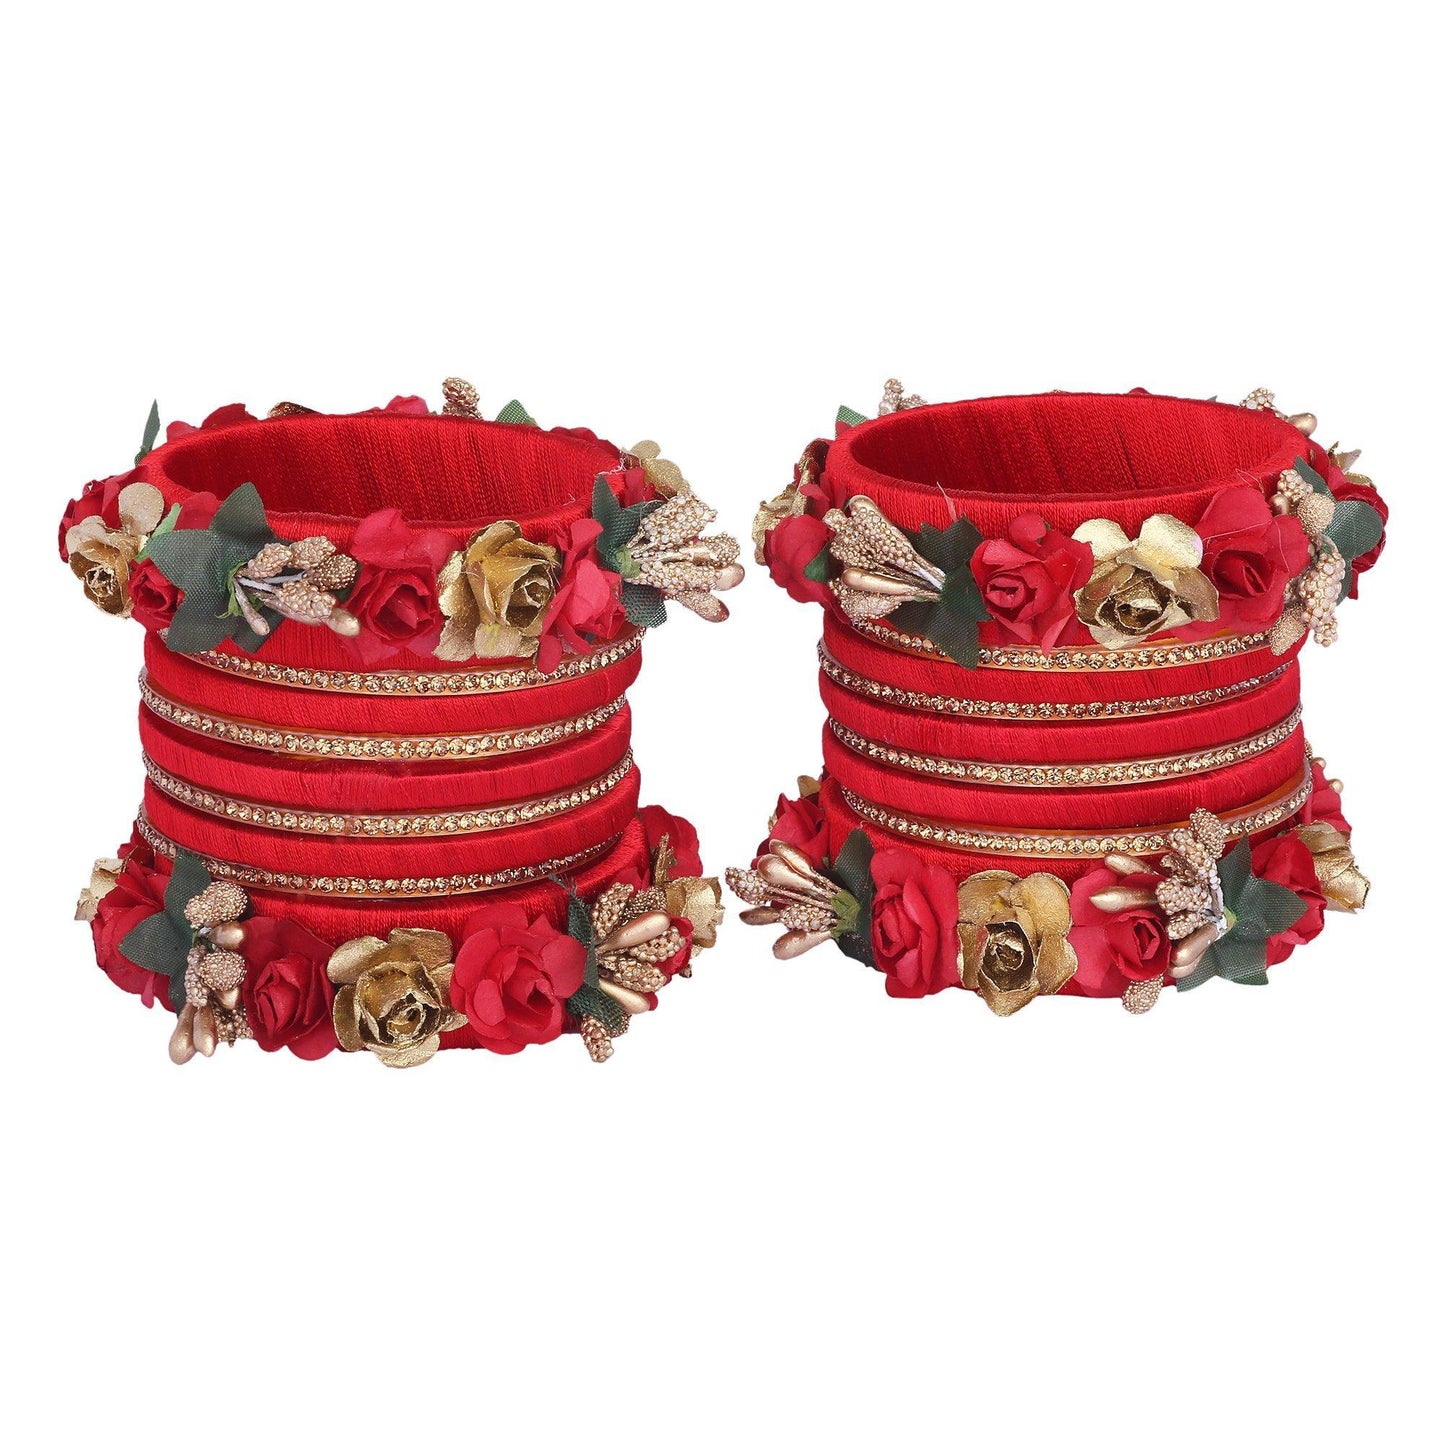 sukriti stylish designer party wedding wear flower silk thread red bangles for girls & women – set of 18